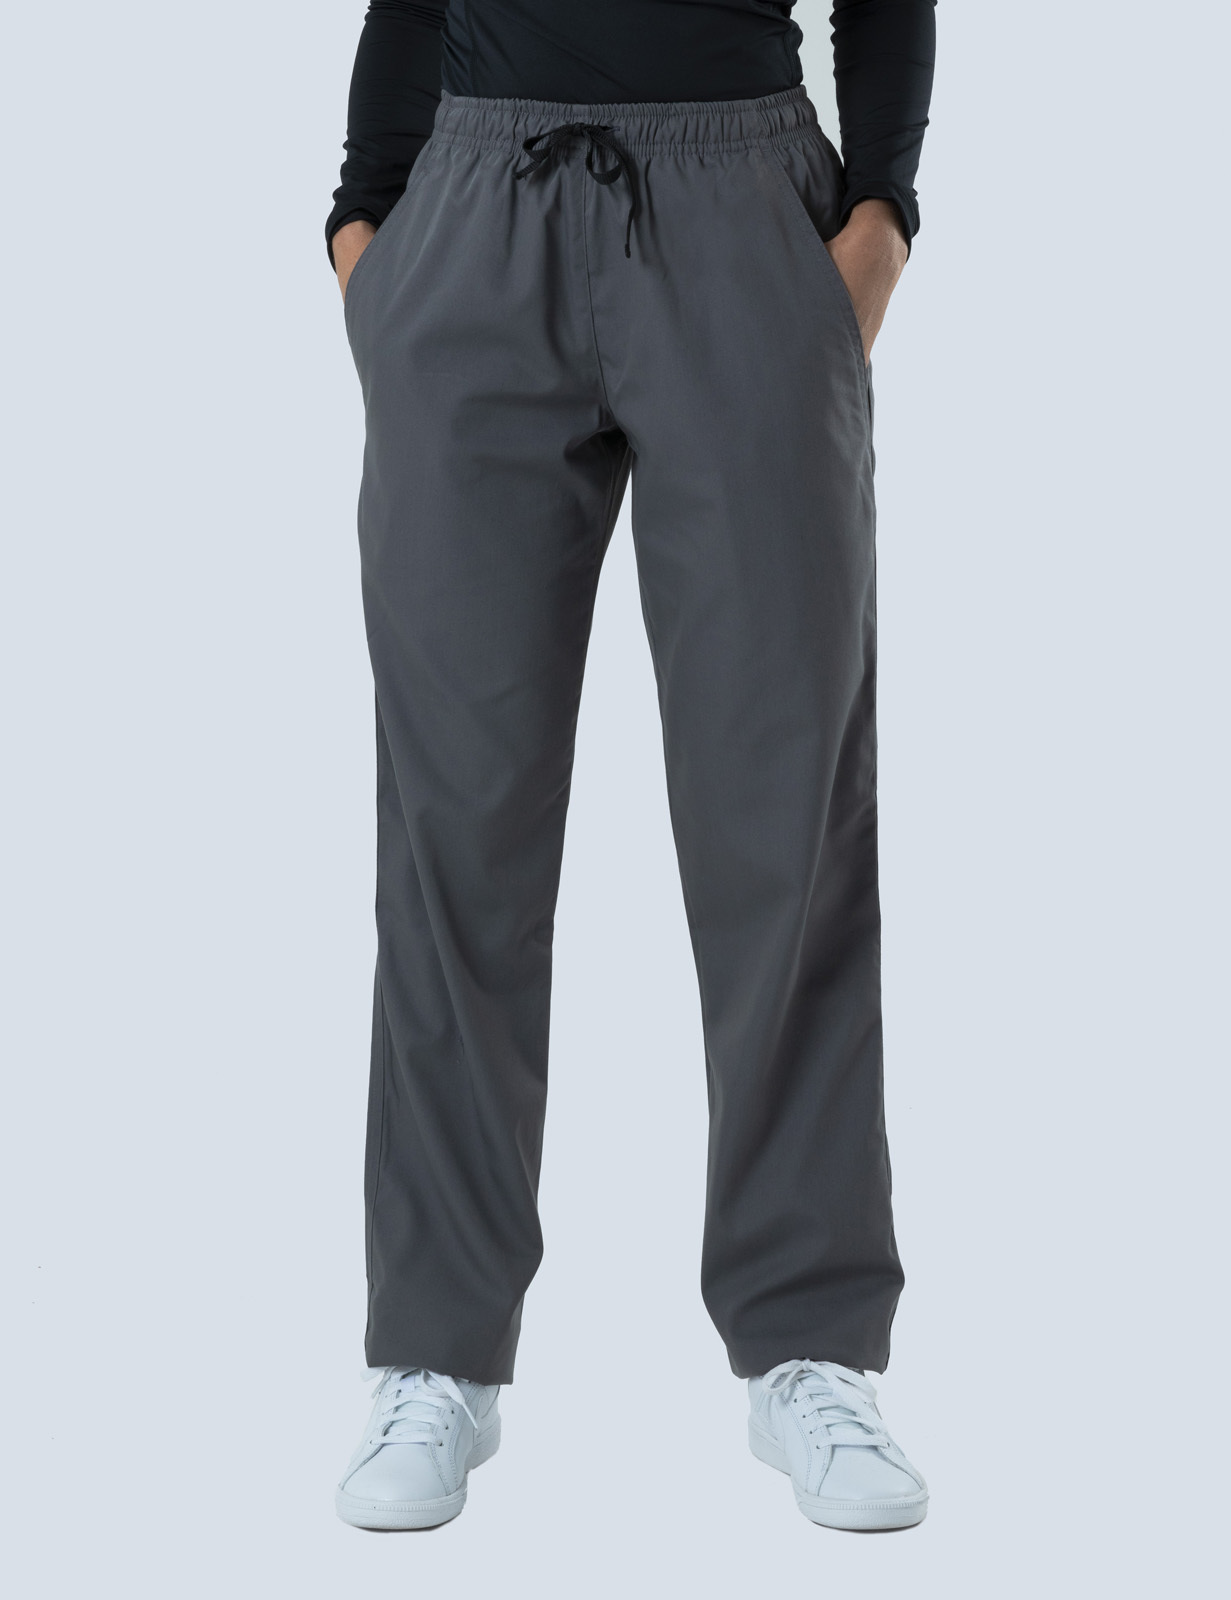 Women's Regular Cut Pants - Steel Grey - 3X Large - Tall